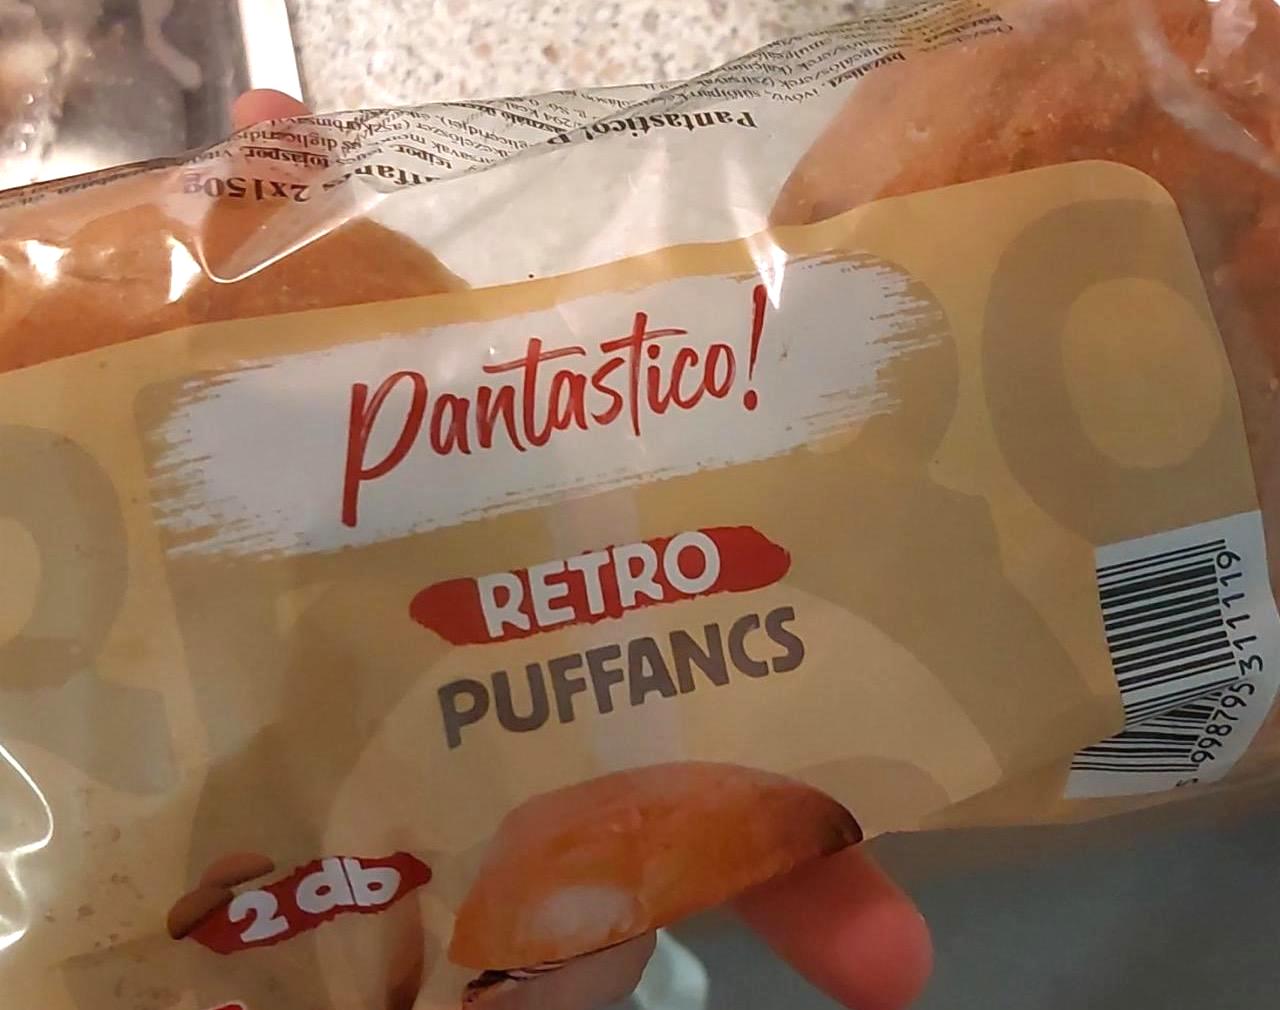 Képek - Retro puffancs Pantastico!